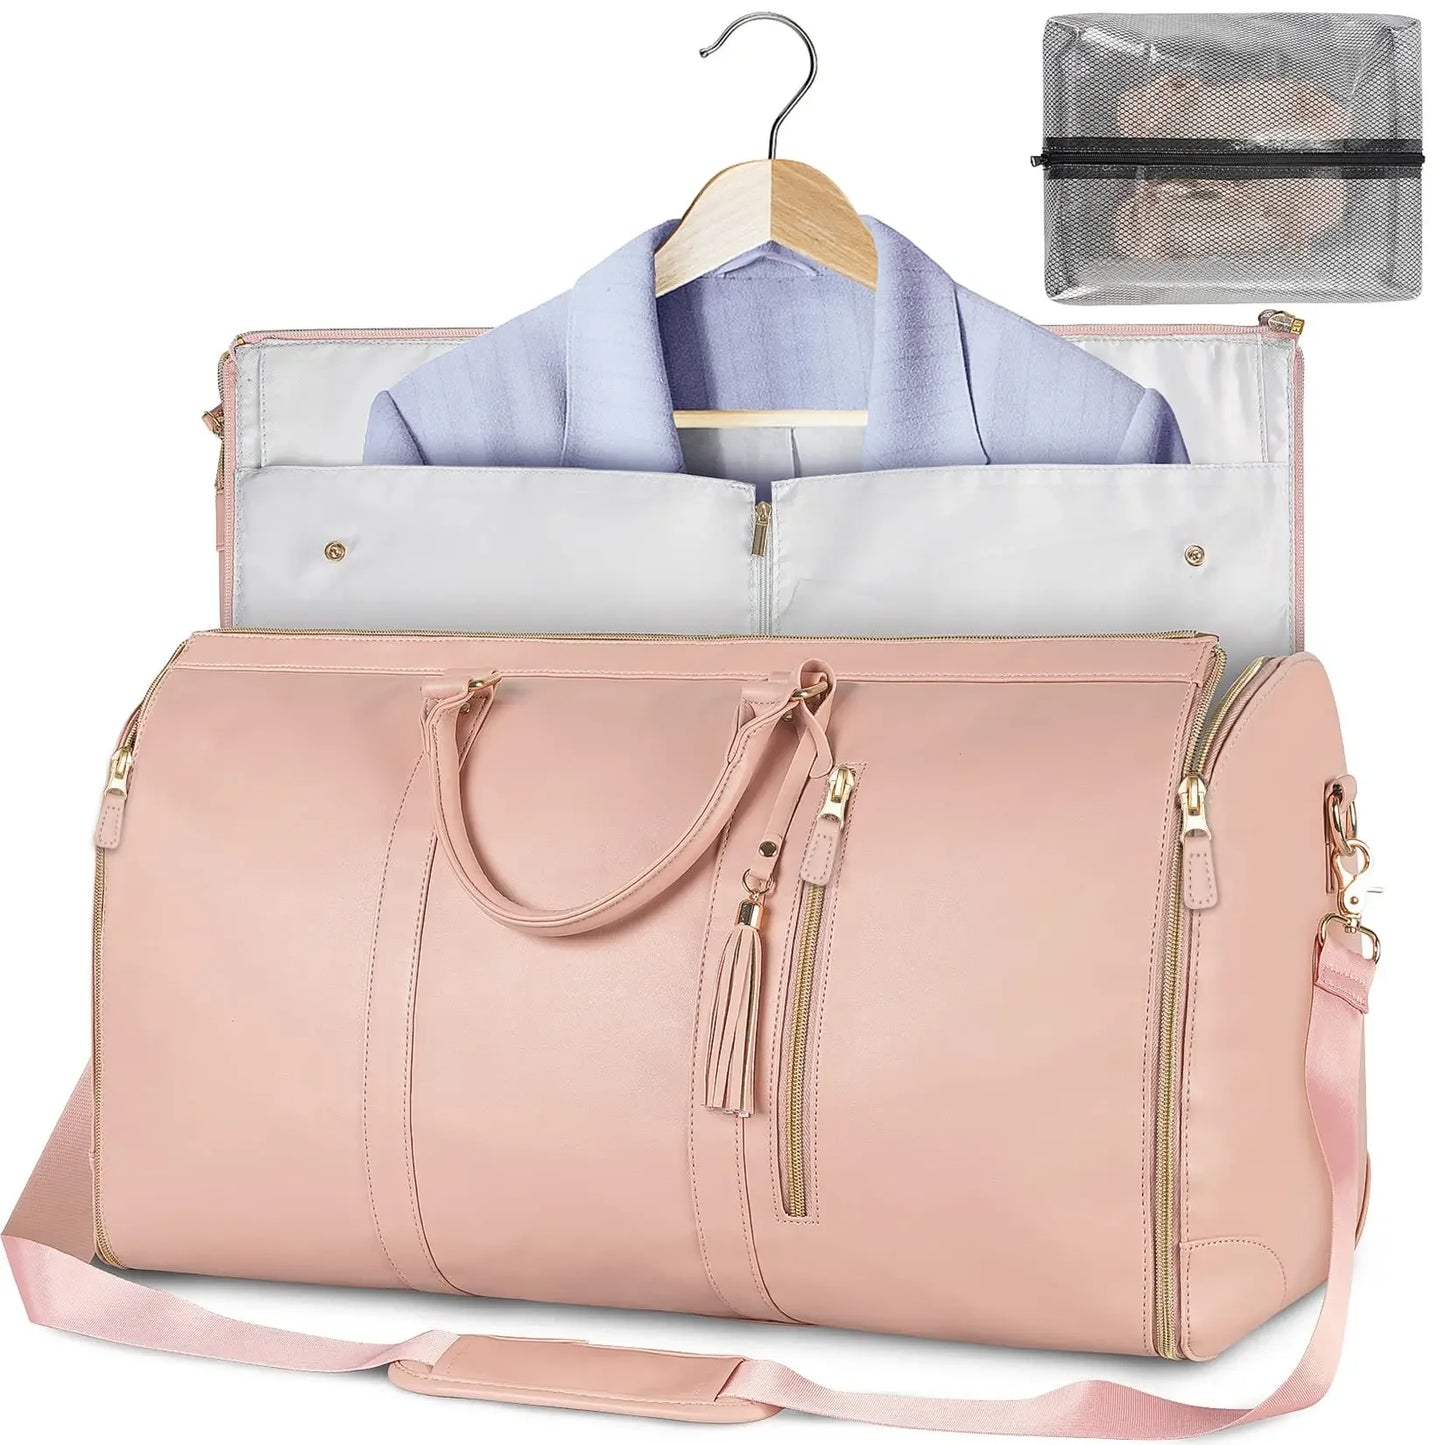 Convertible Garment Bags for Travel SKU 82040